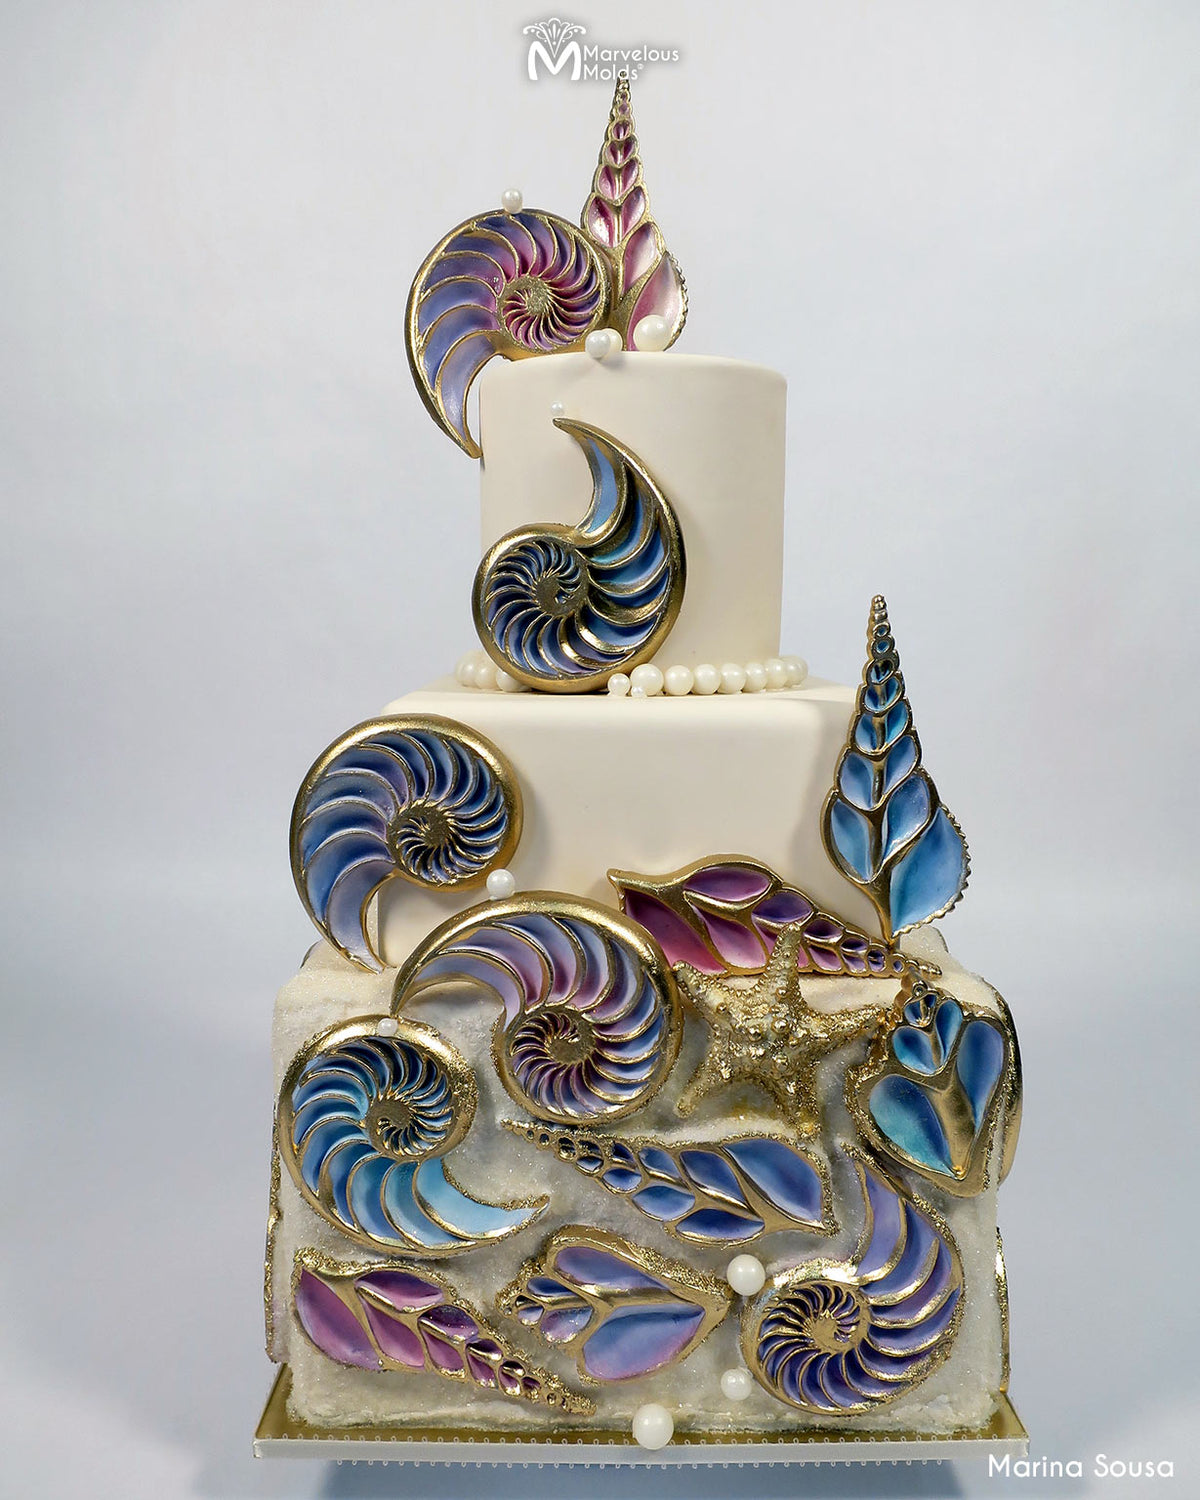 Nautilus Beach Wedding Cake Decorated with Marvelous Molds Nautilus Shell Left Silicone Mold